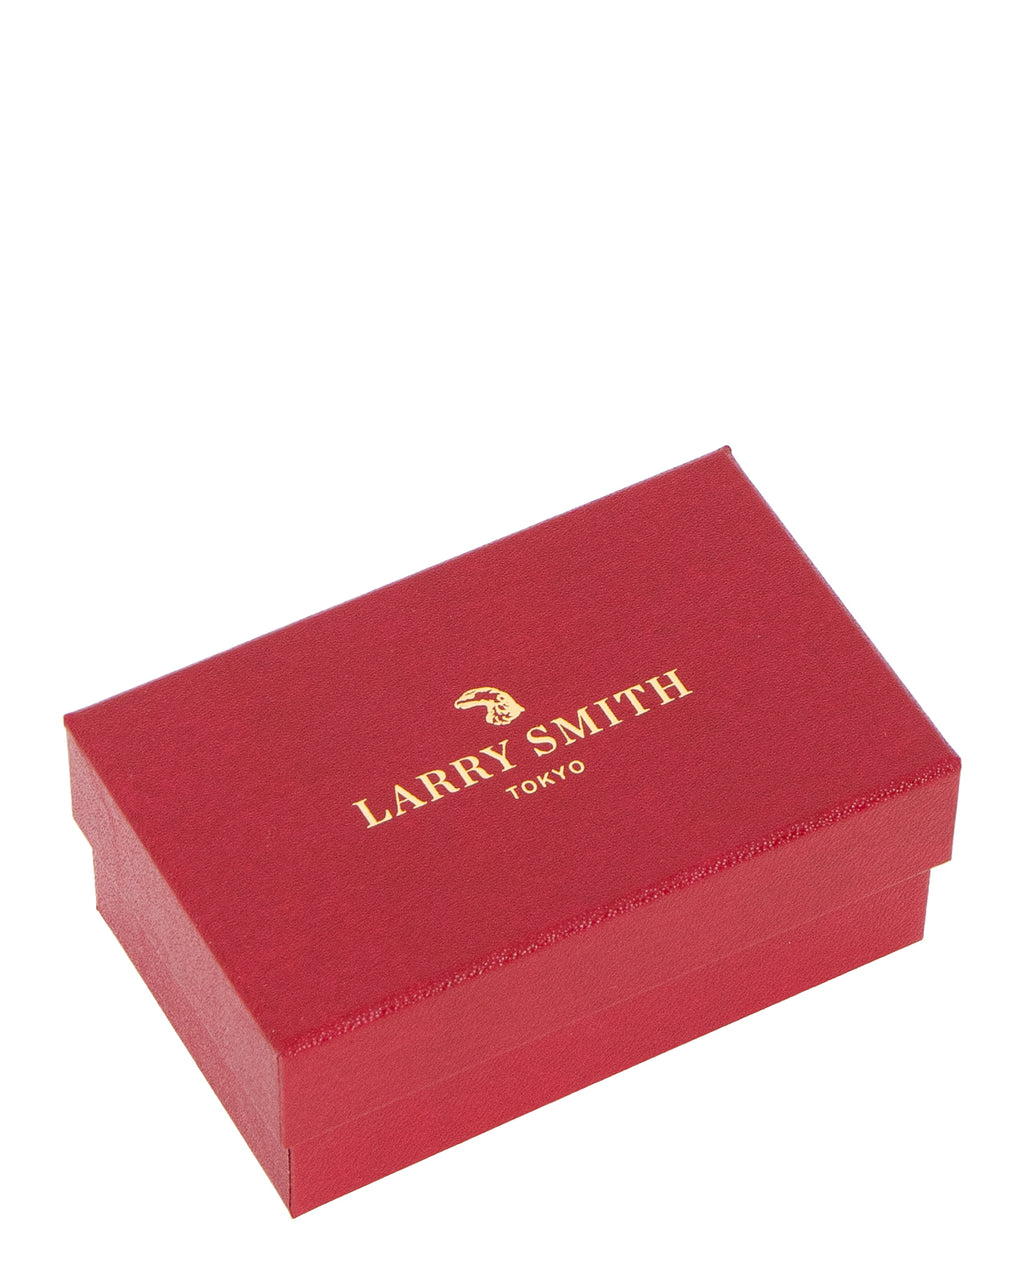 Larry Smith Triangle Tapered End Bracelet (Leaf)